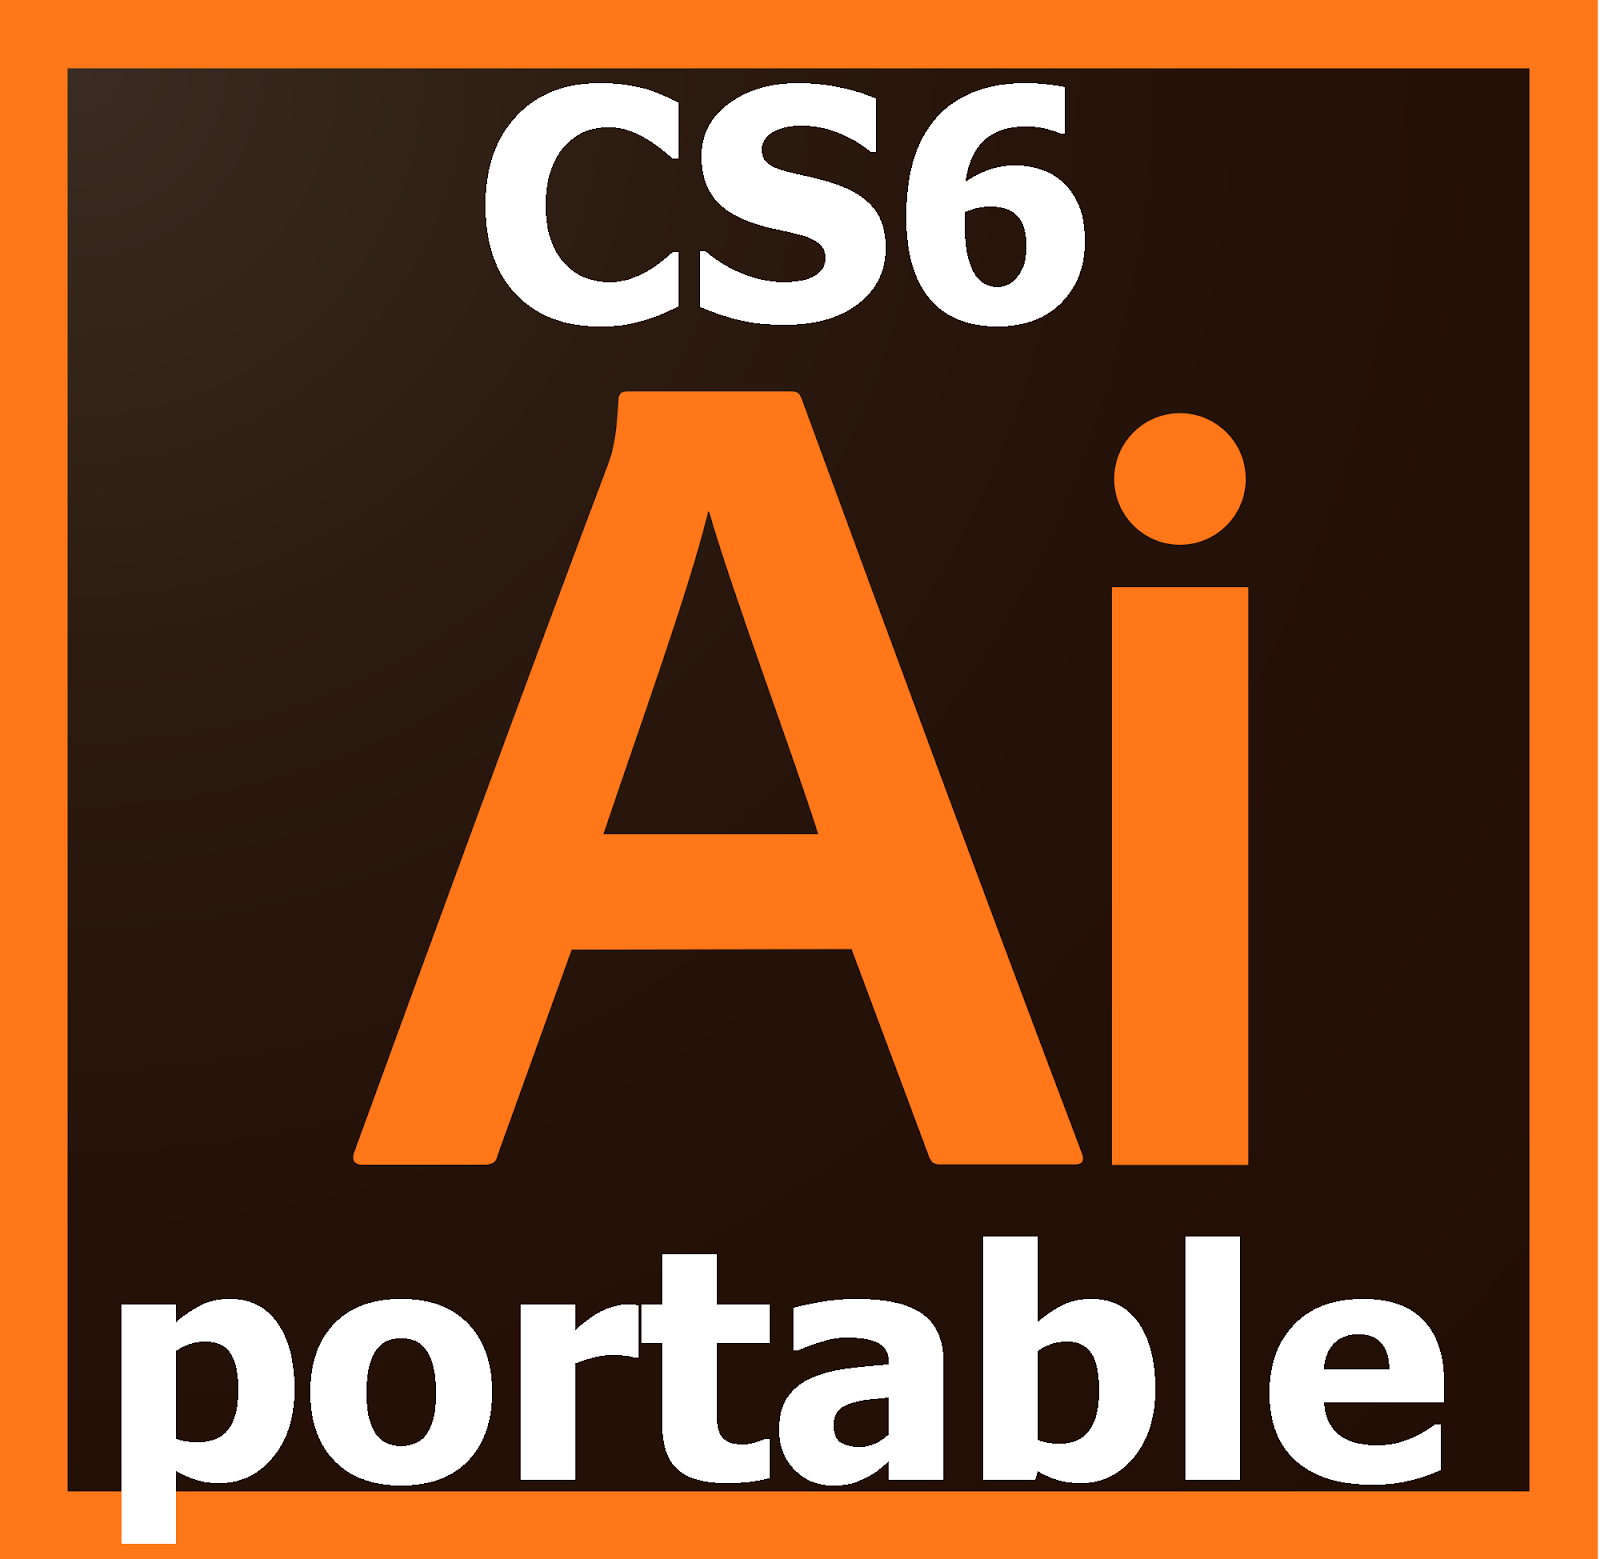 adobe illustrator cs6 torrent download for windows